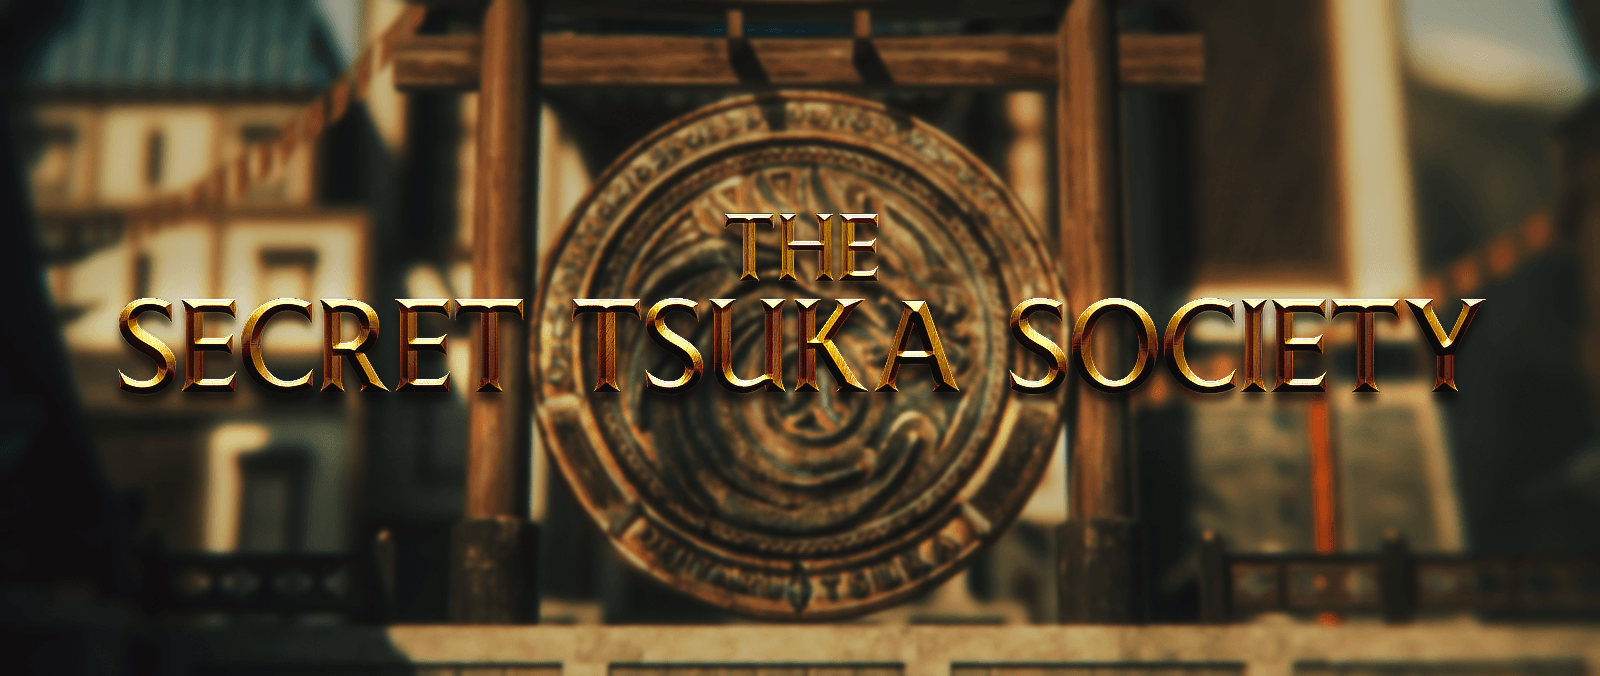 TsukaSociety banner